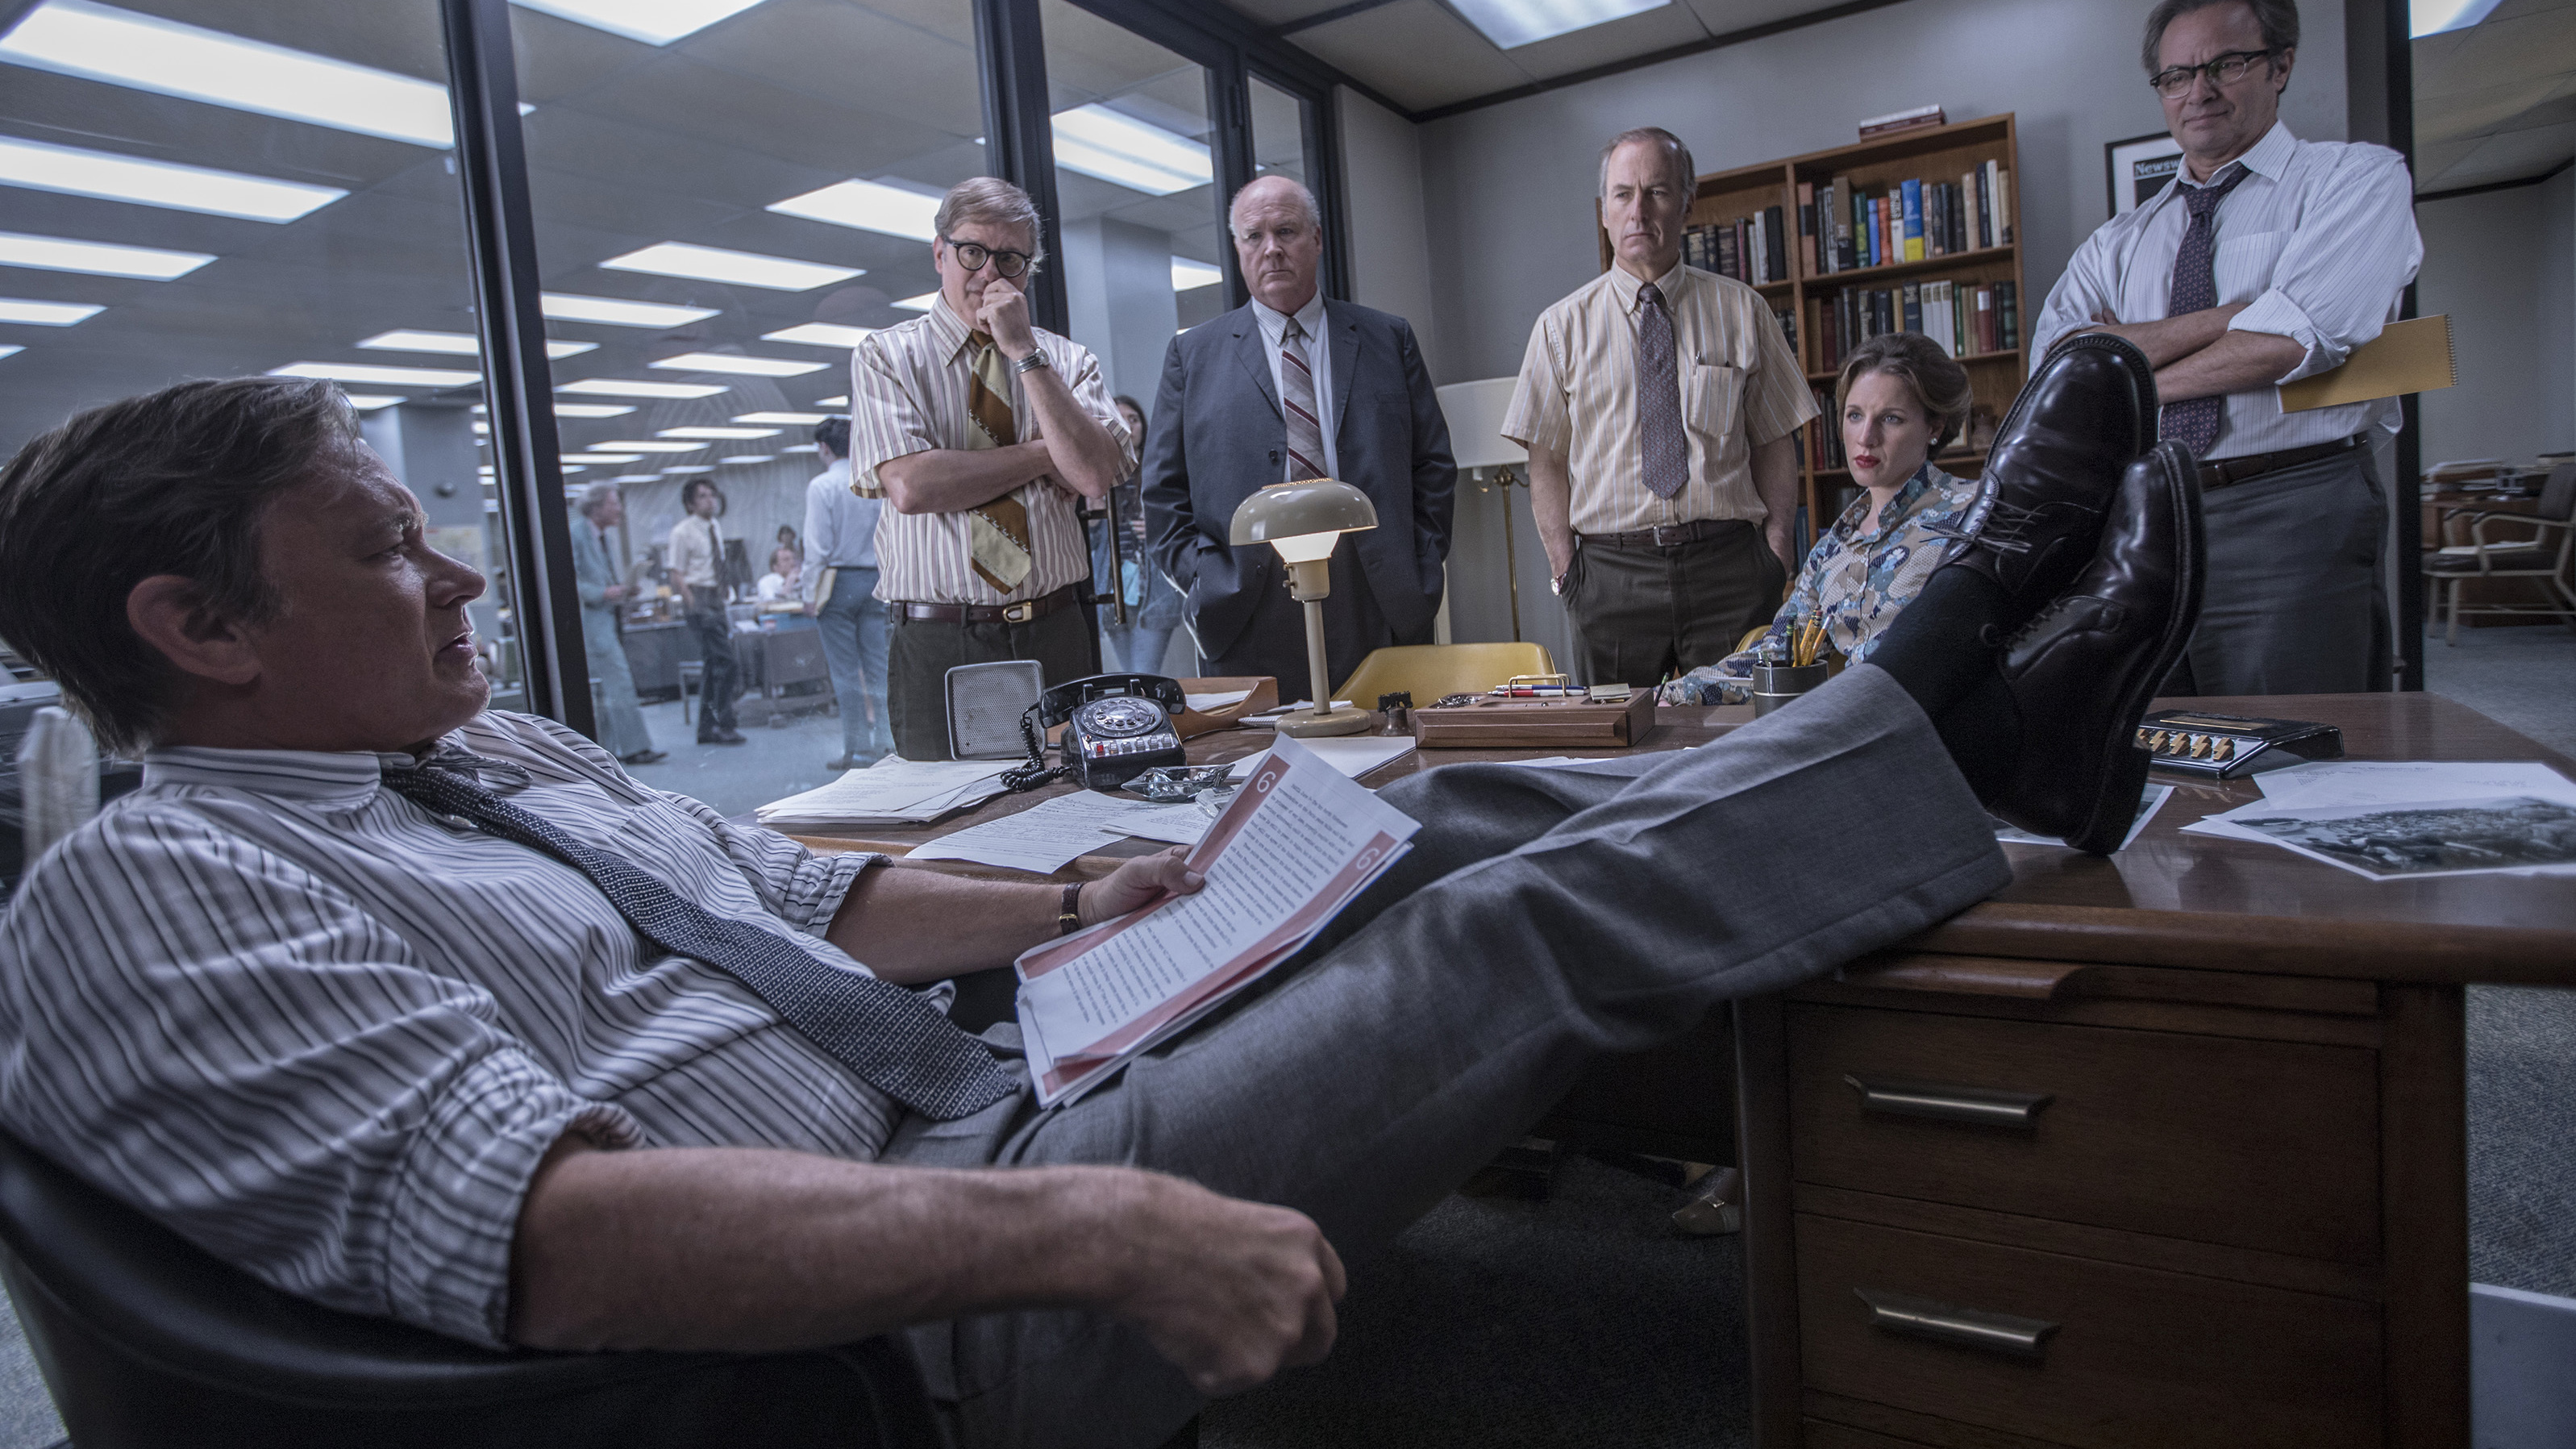 Steven Spielberg's The Post stars Tom Hanks as Washington Post editor-in-chief Ben Bradlee. (Also pictured: David Cross, John Rue, Bob Odenkirk, Jessie Mueller and Philip Casnoff.)